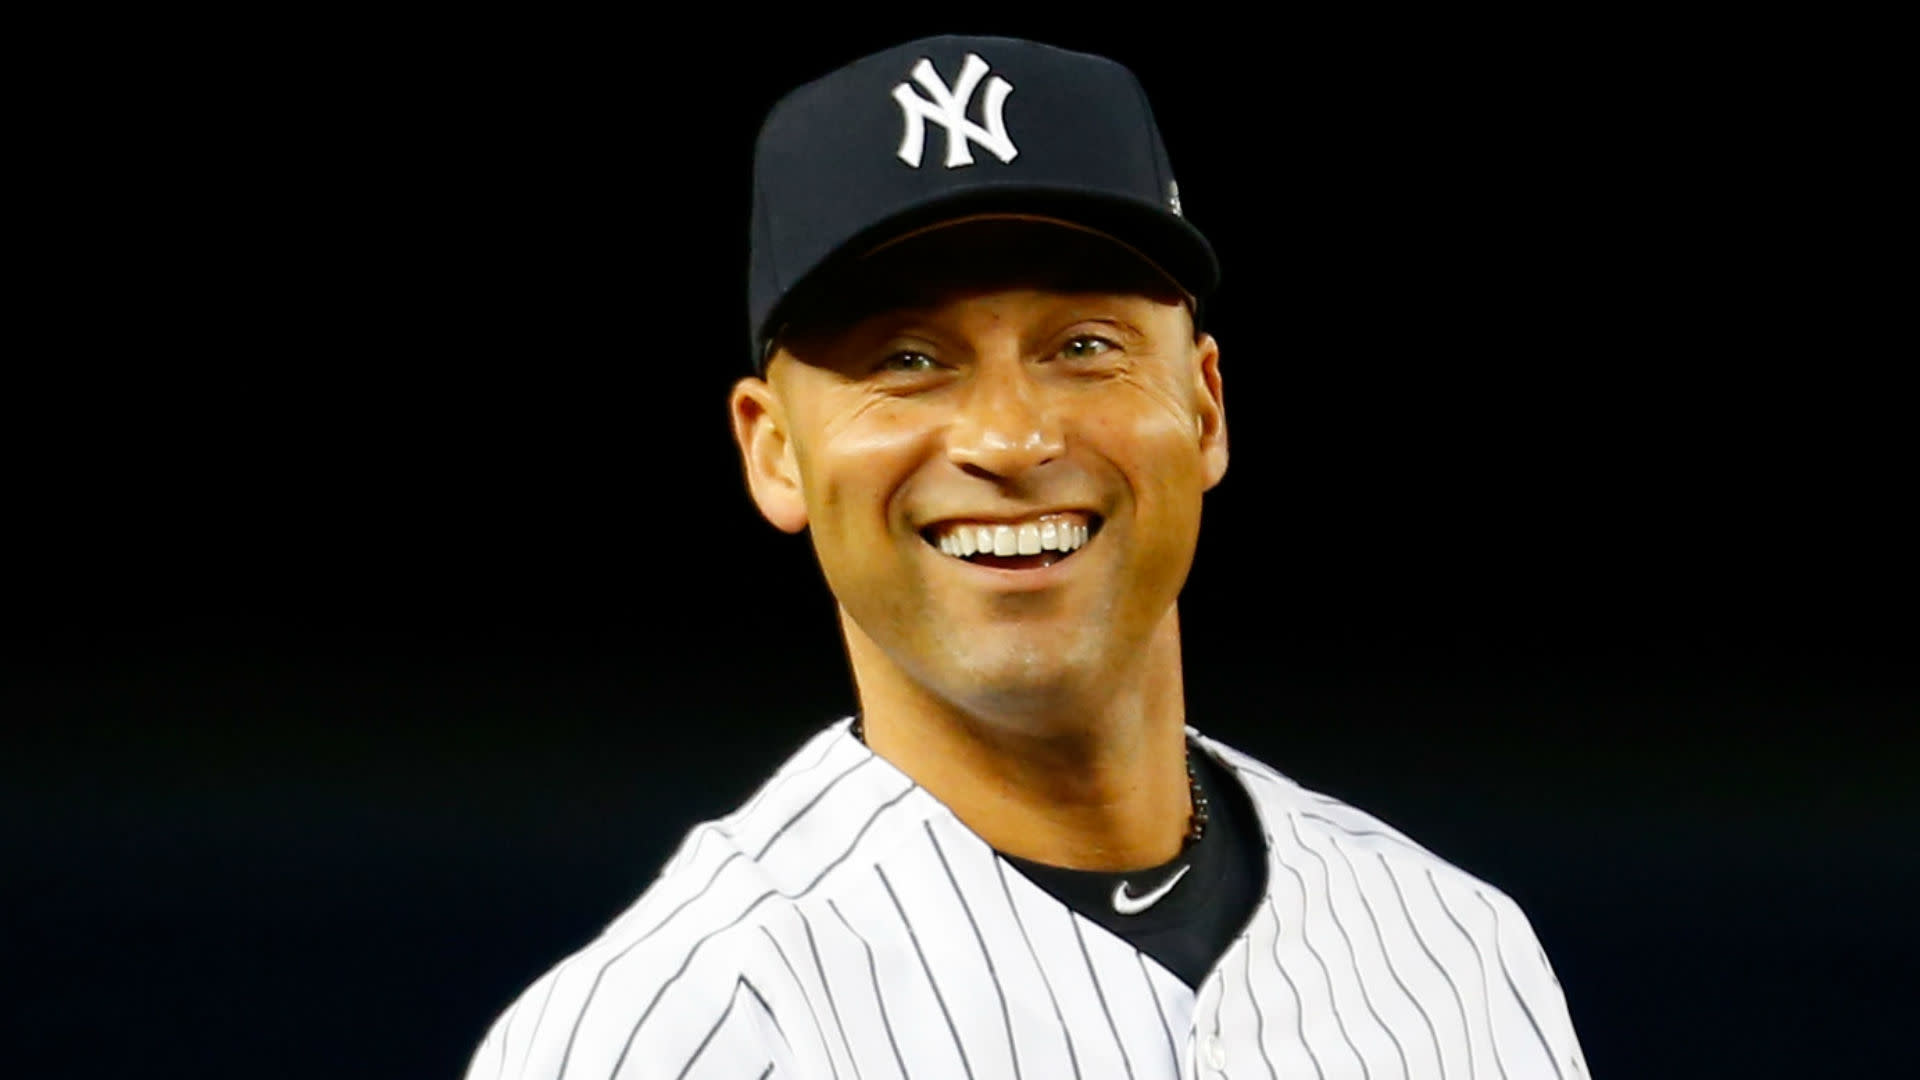 MLB: New York Yankees to retire Derek Jeter's No.2 jersey